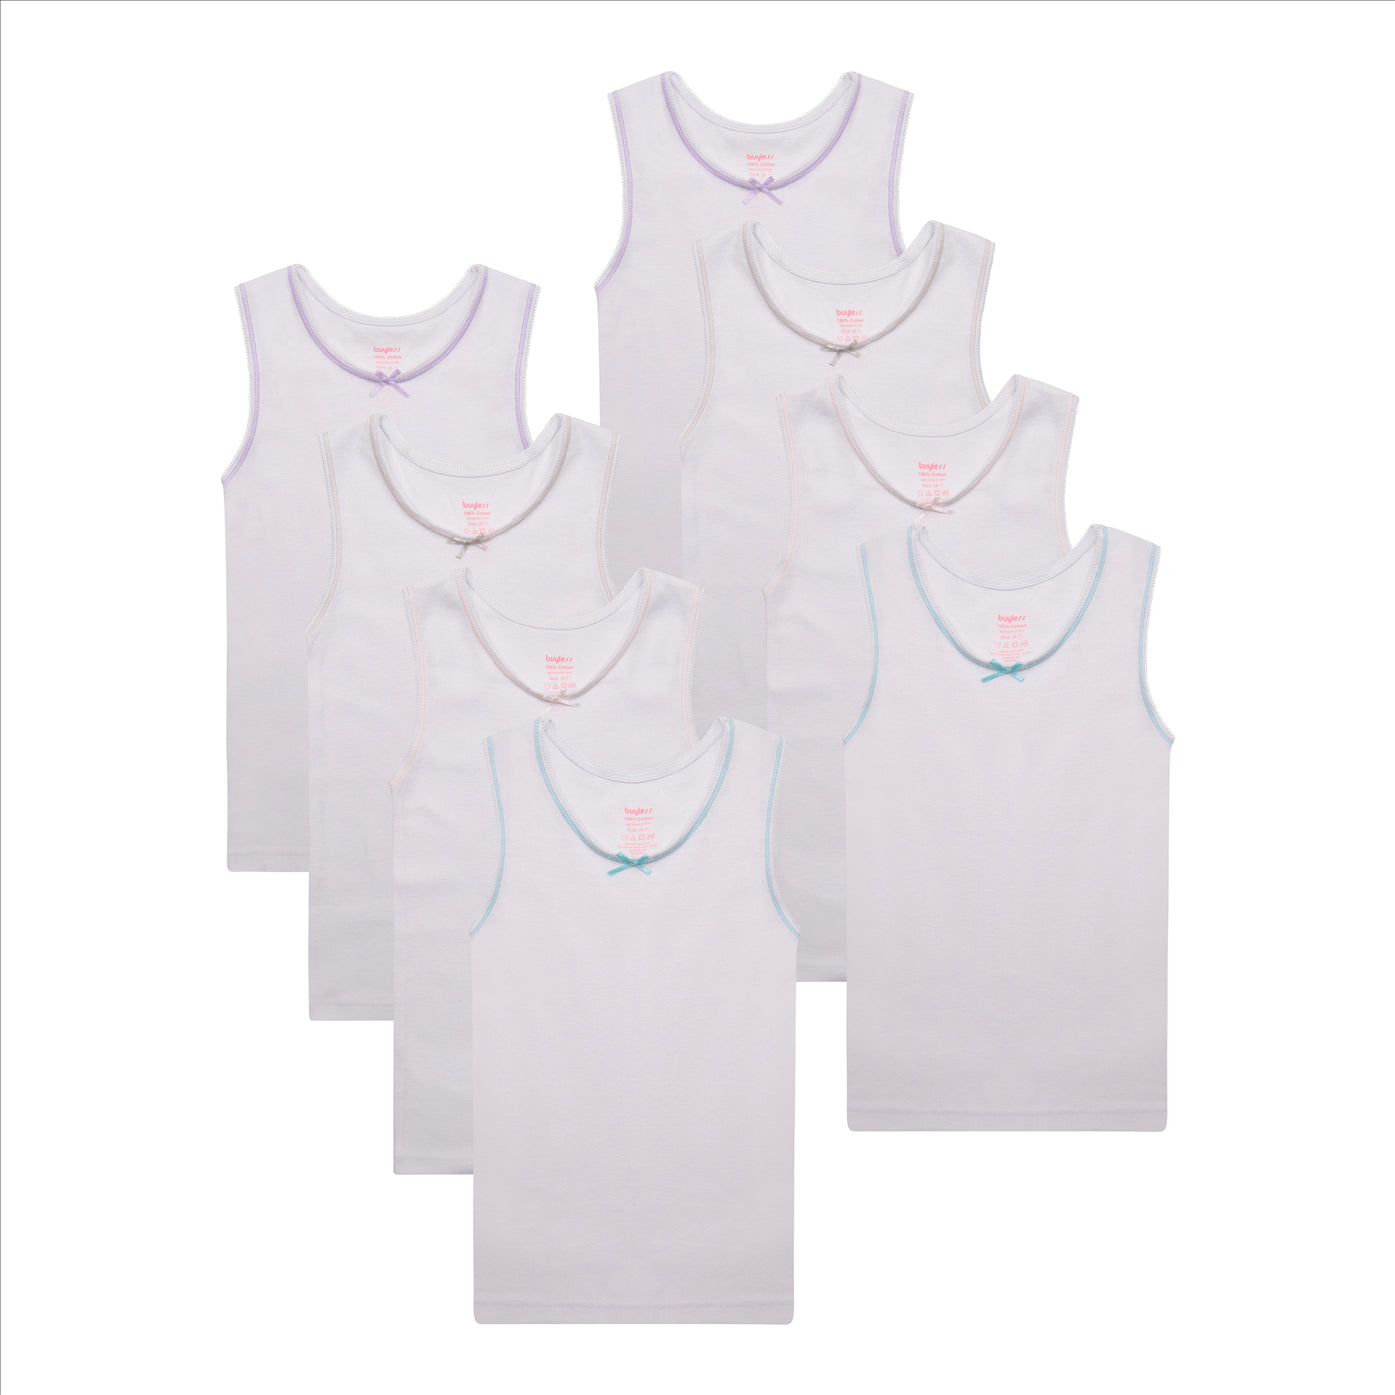 Buyless fashion girls tagless cami scoop neck undershirts cotton tank